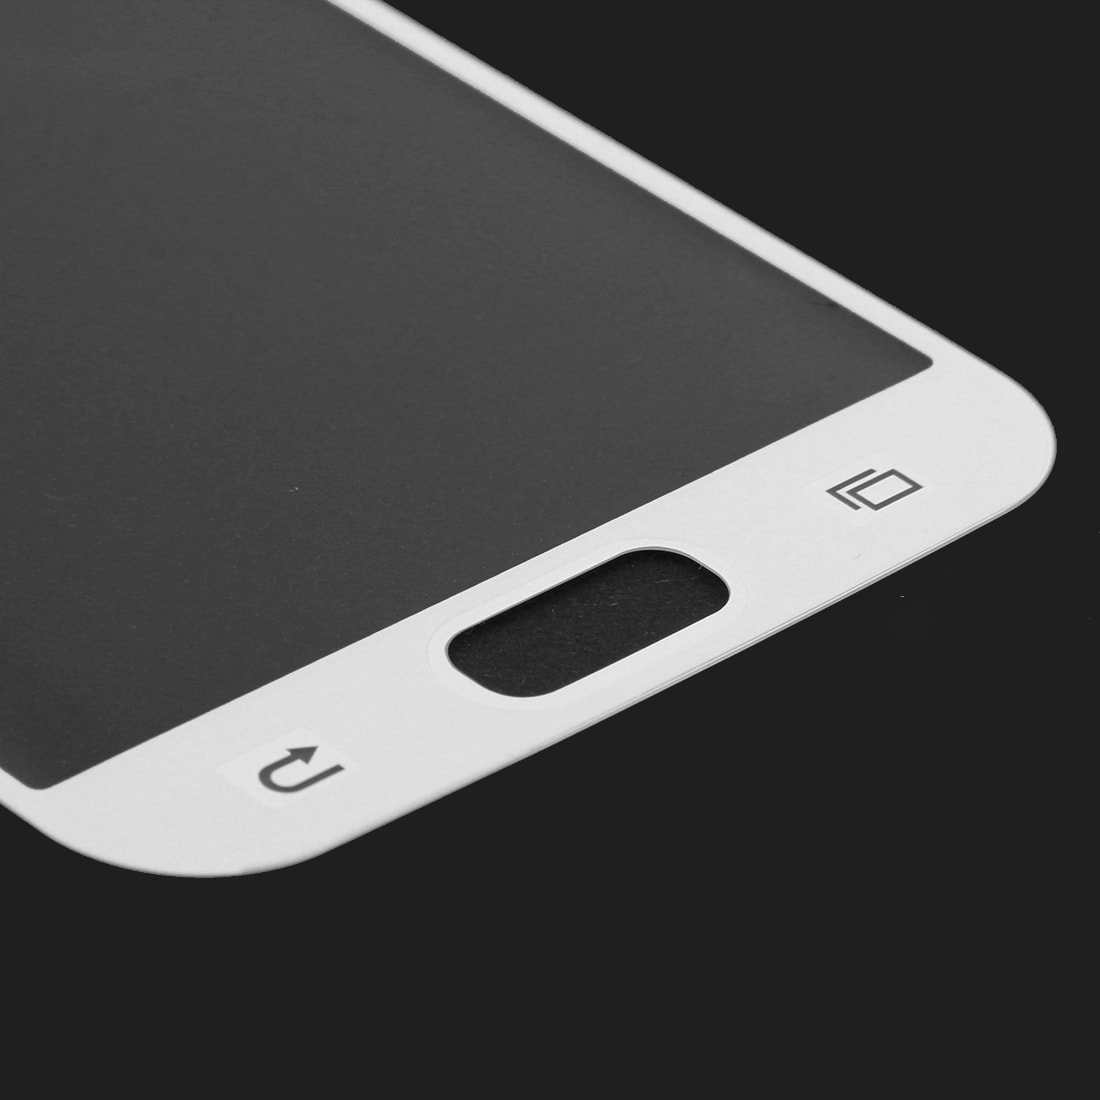 Glasskydd till Samsung Galaxy S7 - Vit